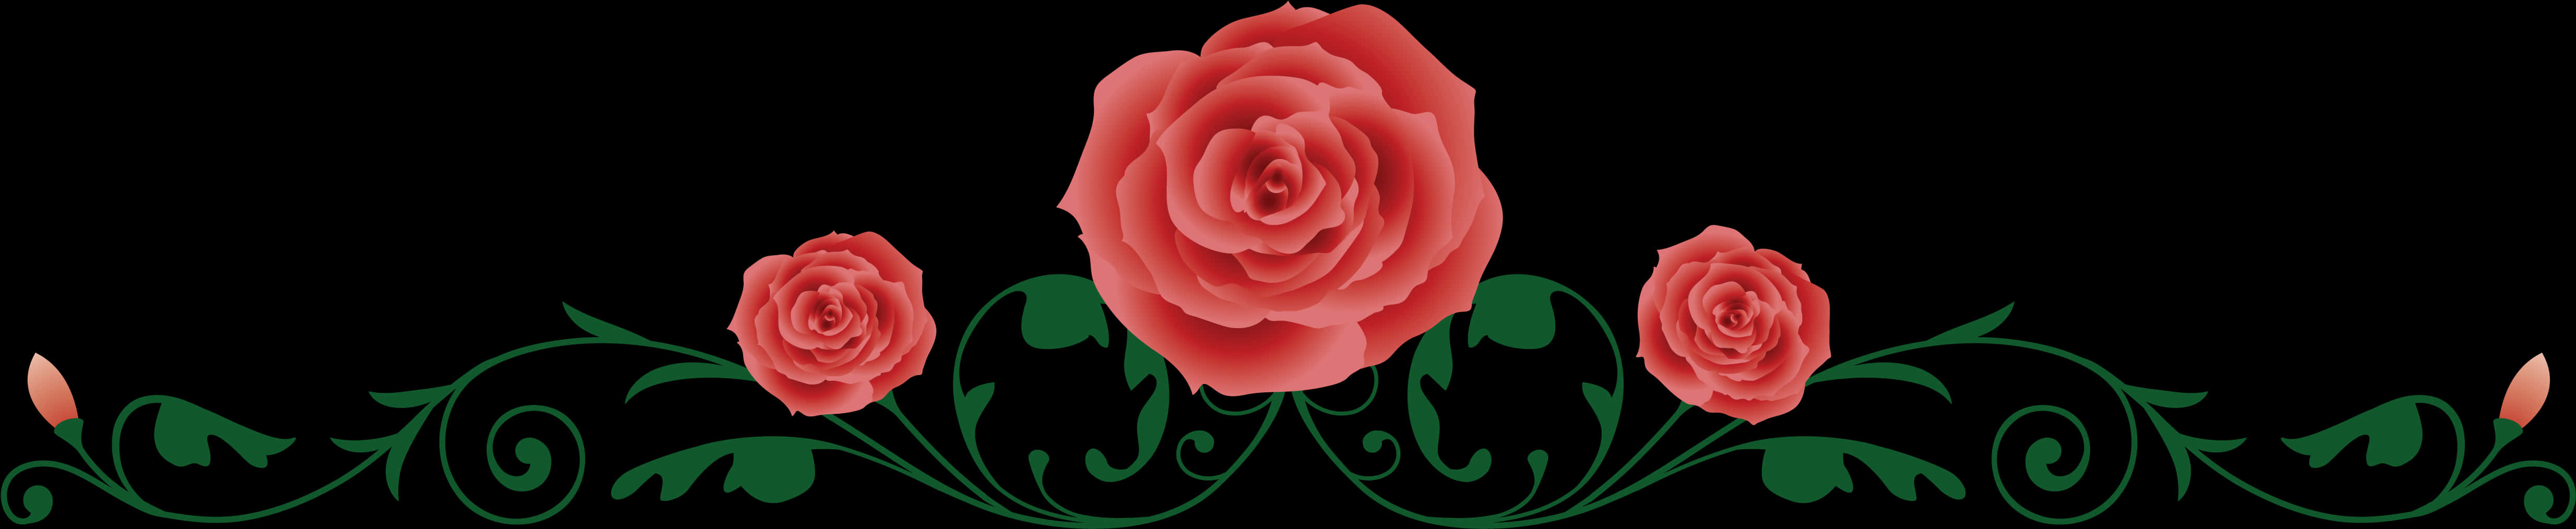 Elegant Rose Vine Border